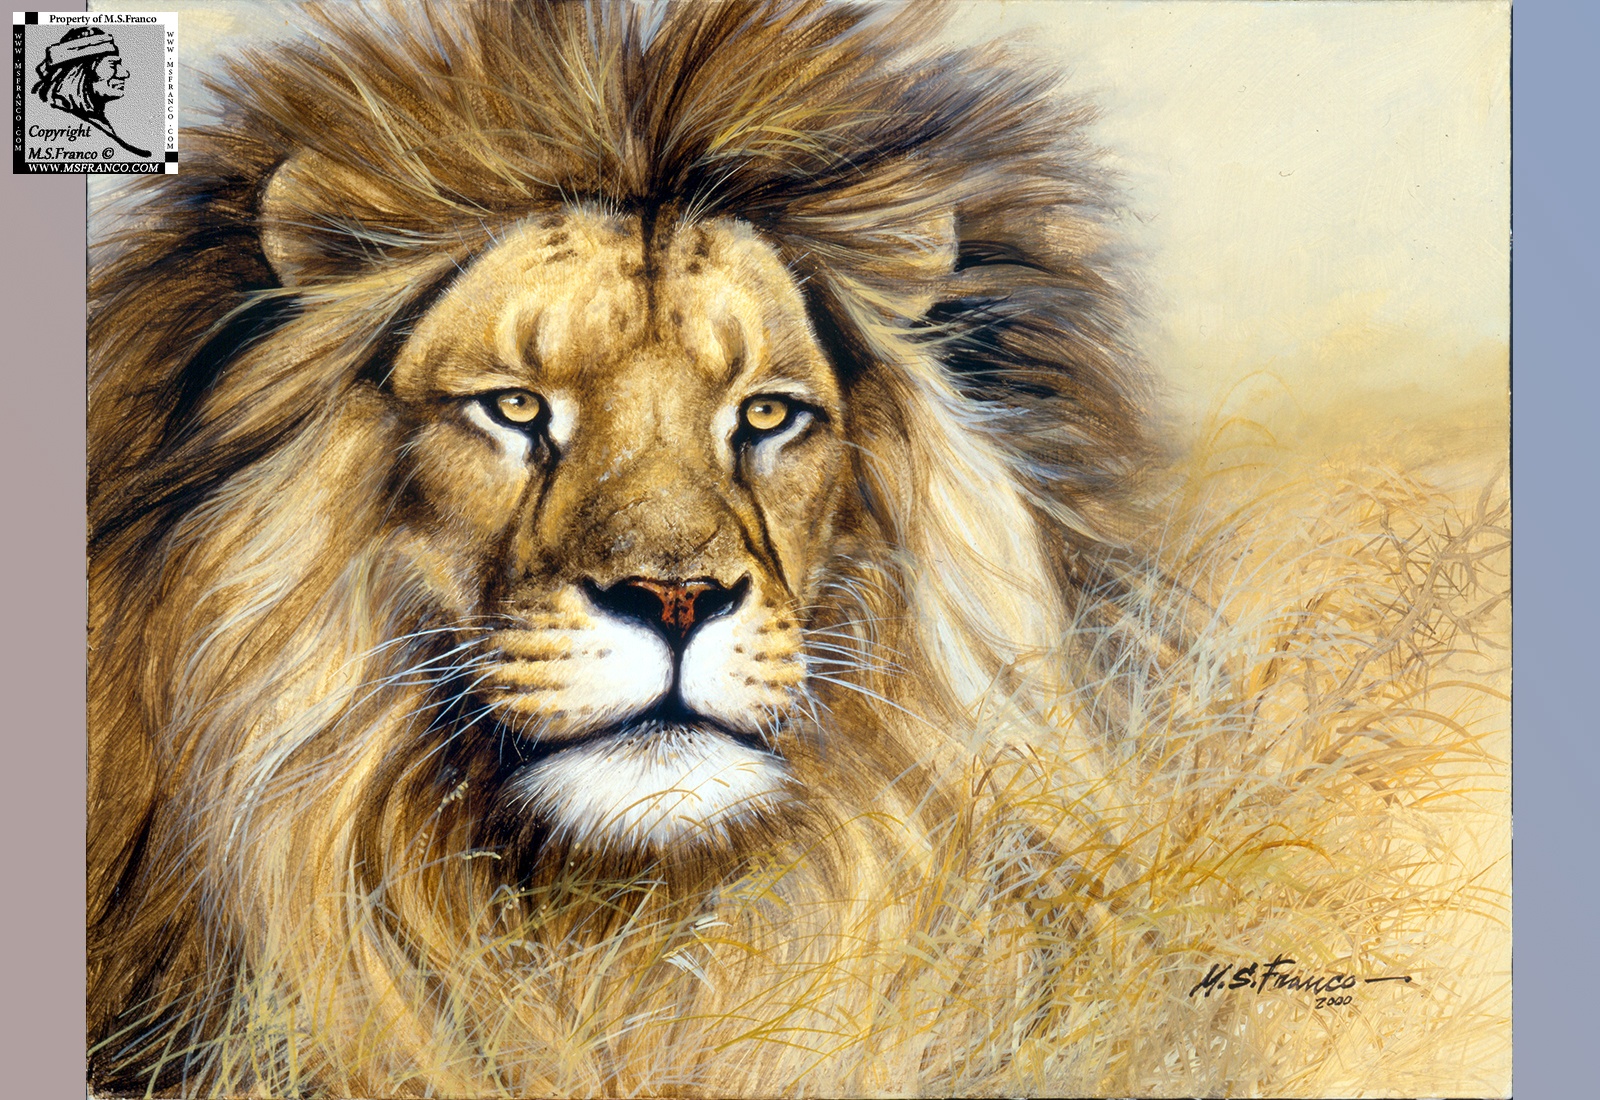 " King of the Serengeti "